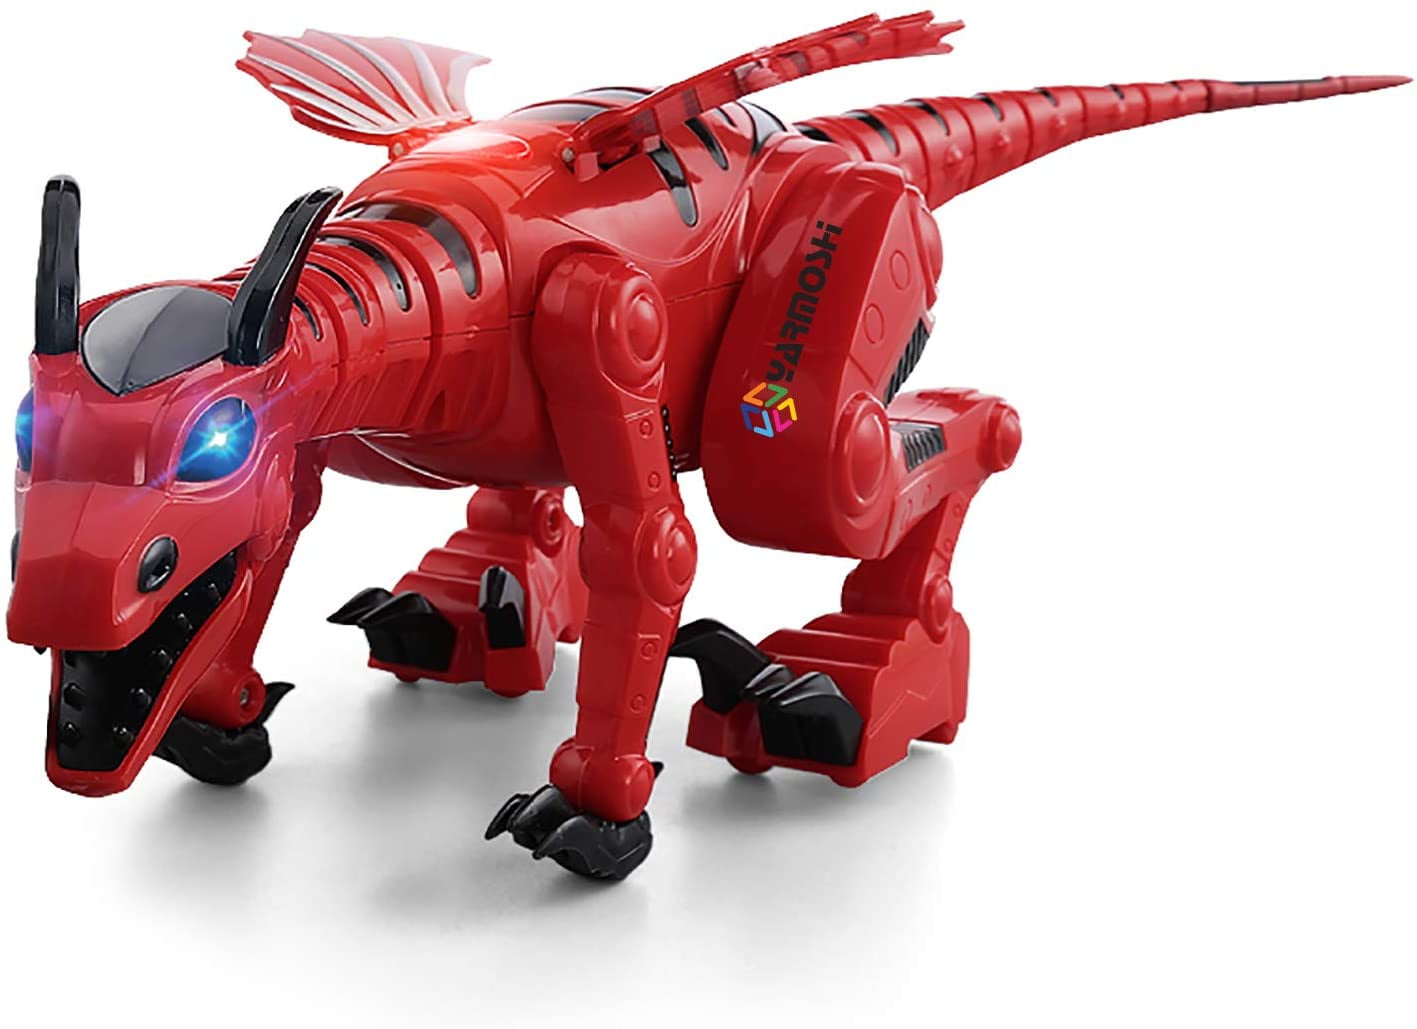 ZURU ROBO ALIVE RED DRAGON Robotic Kids Birthday Christmas Gift